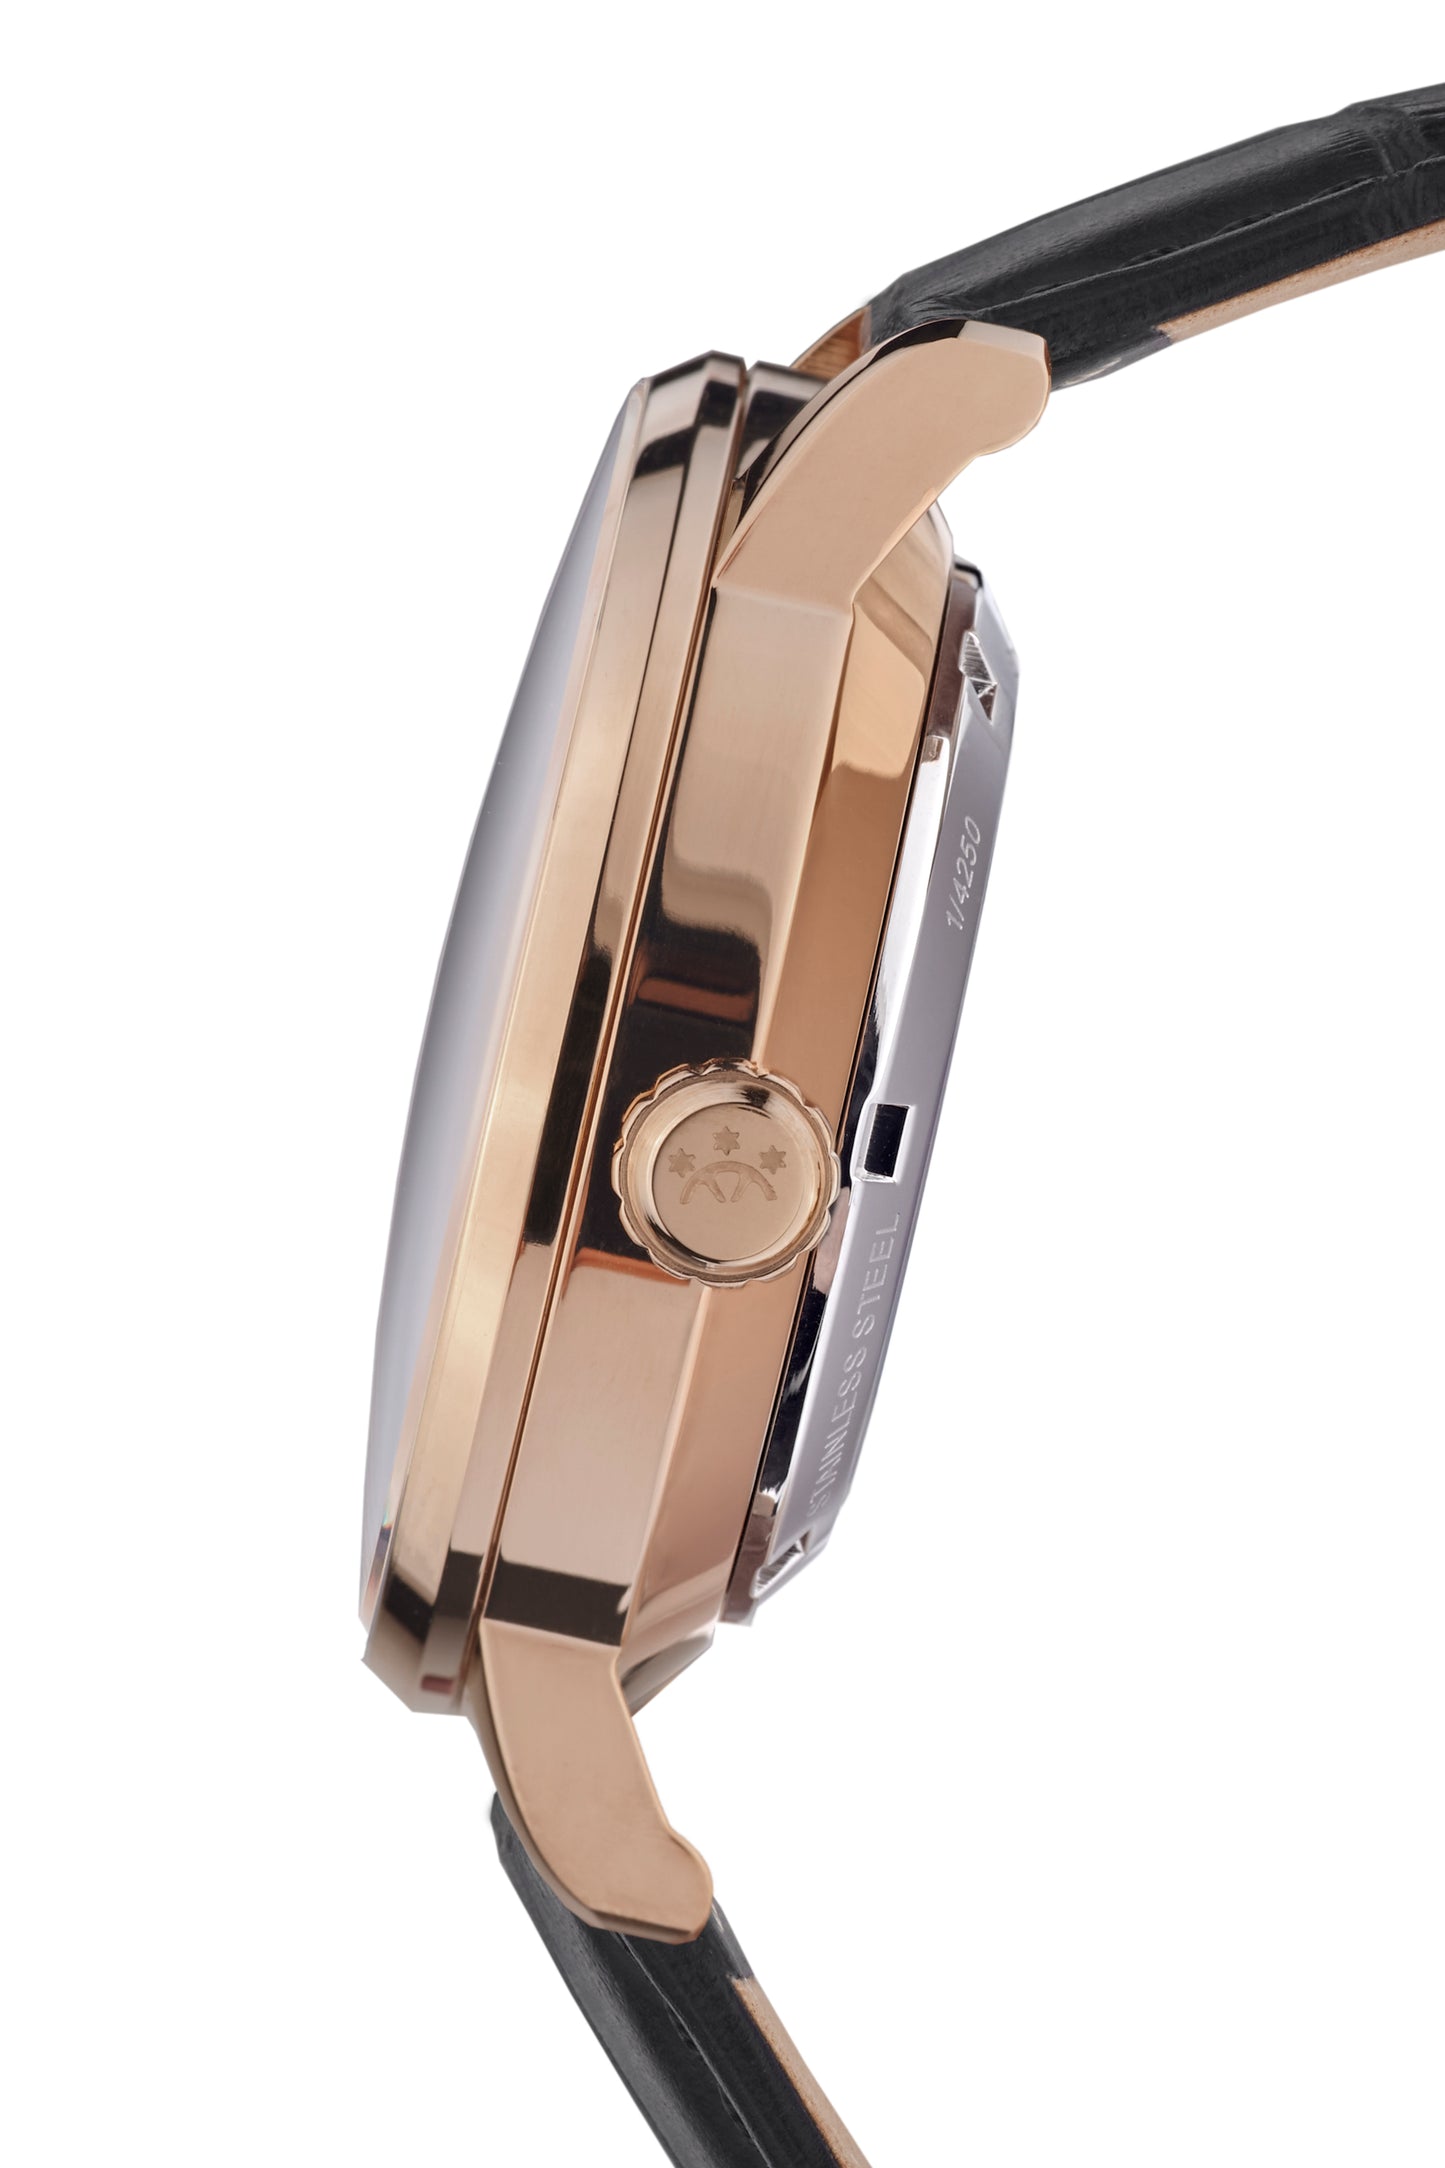 Automatic watches — Delta Dart — Hindenberg — rosegold black